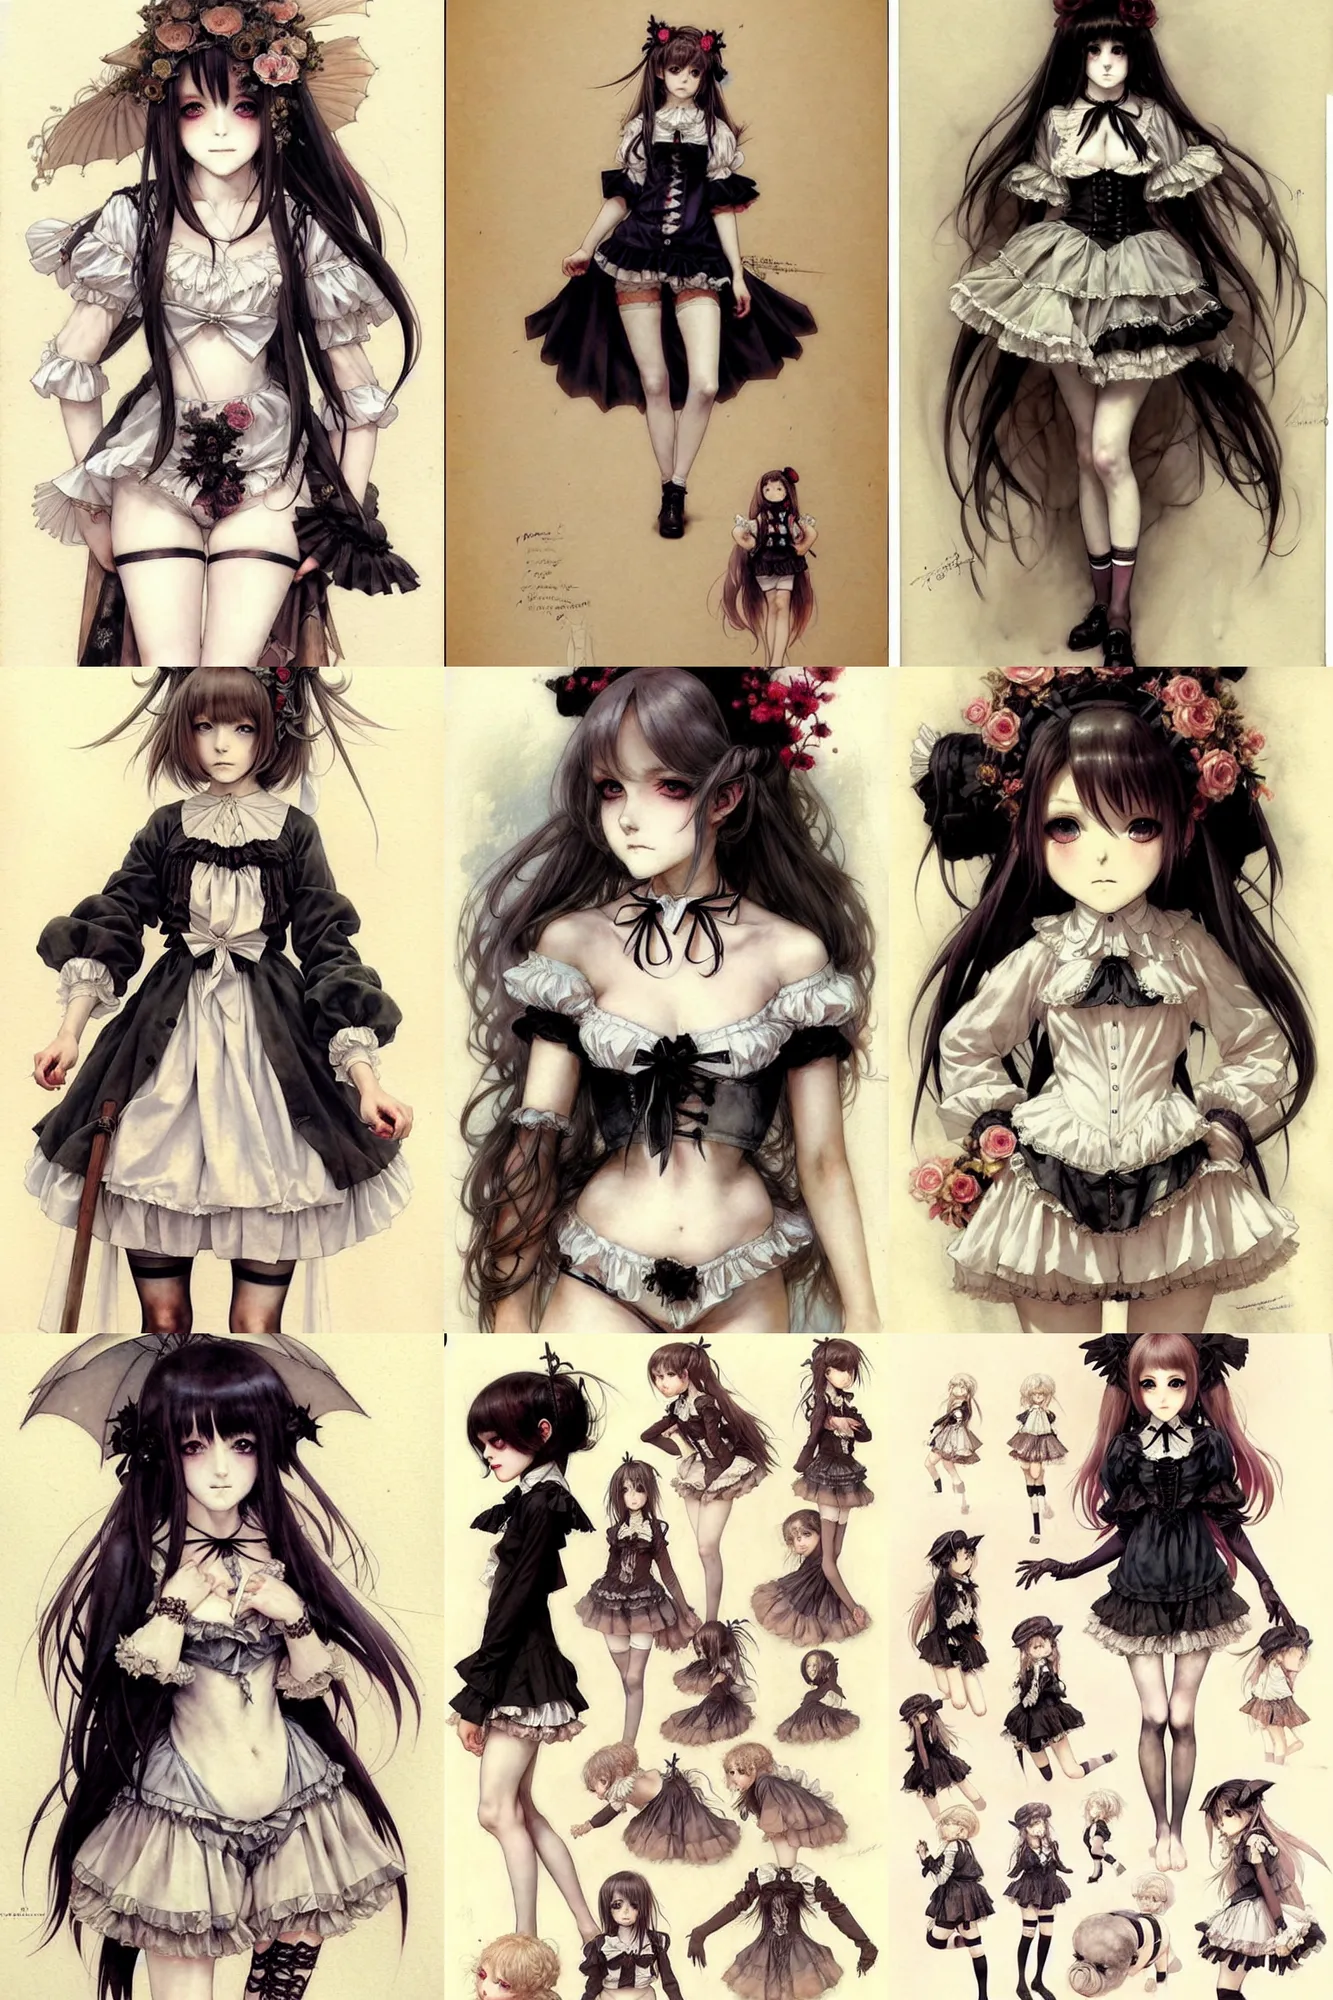 portrait anime as gothic lolita girl in